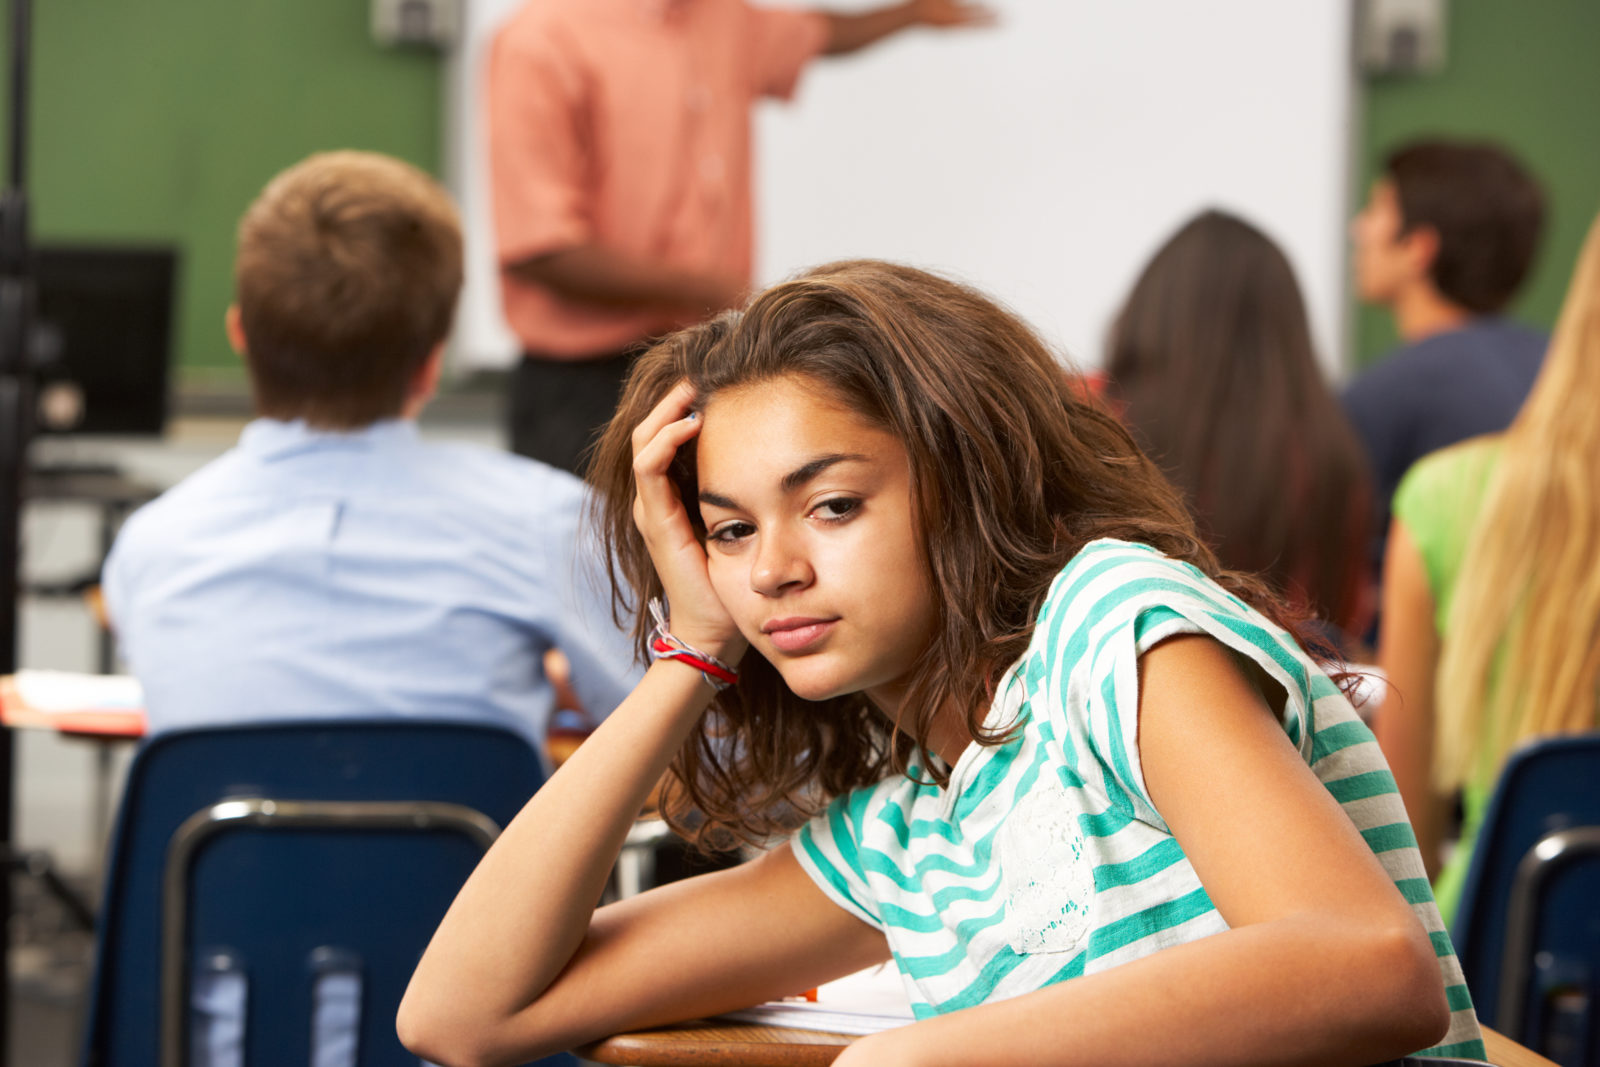 Bored Female Teenage Pupil In Classroom